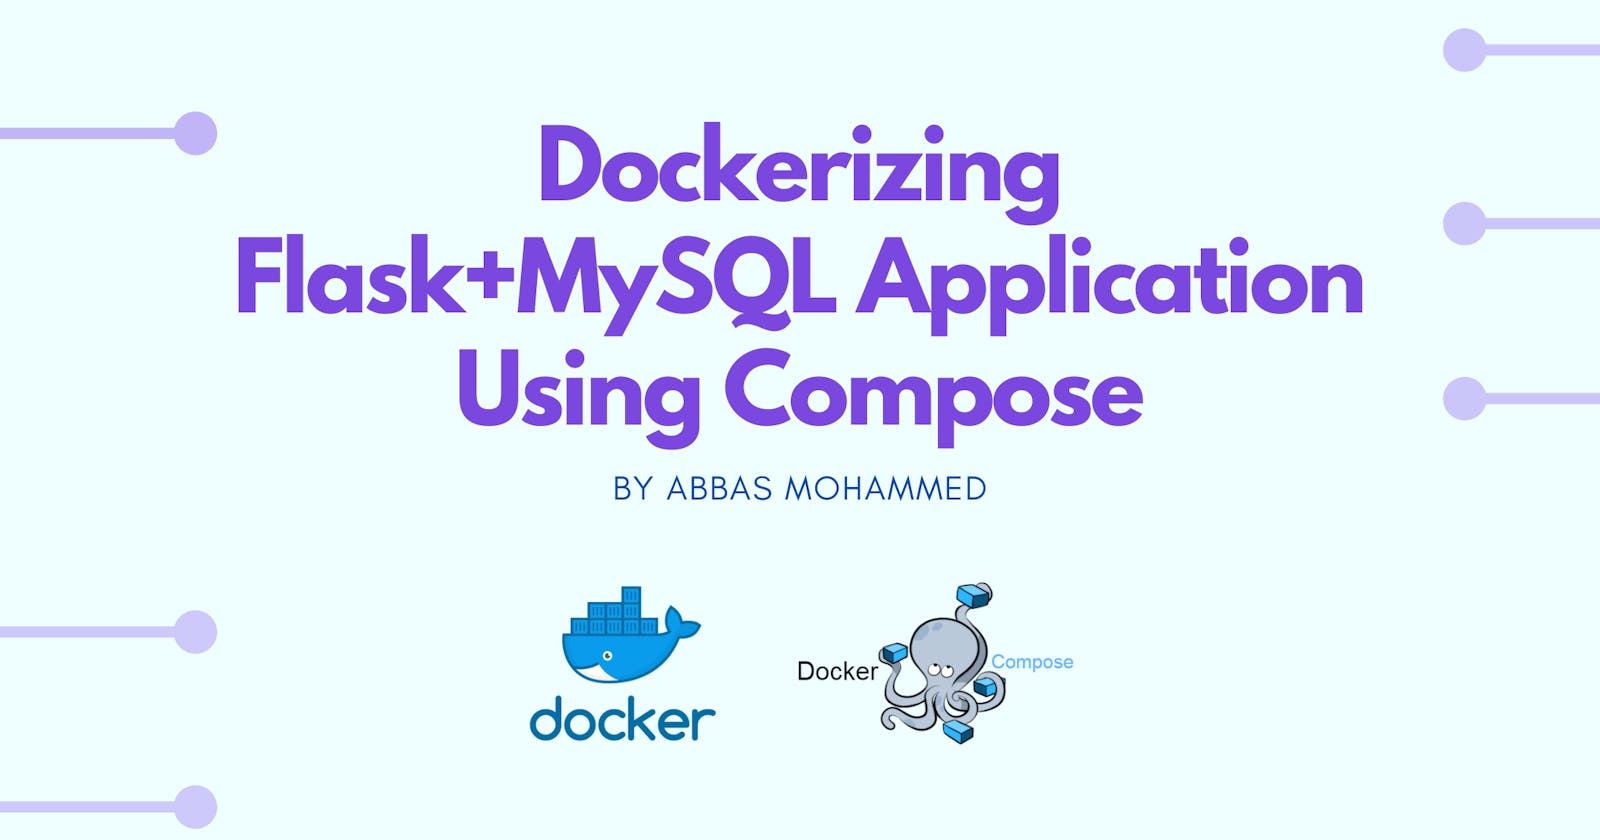 Dockerizing Flask+MySQL Application Using Compose